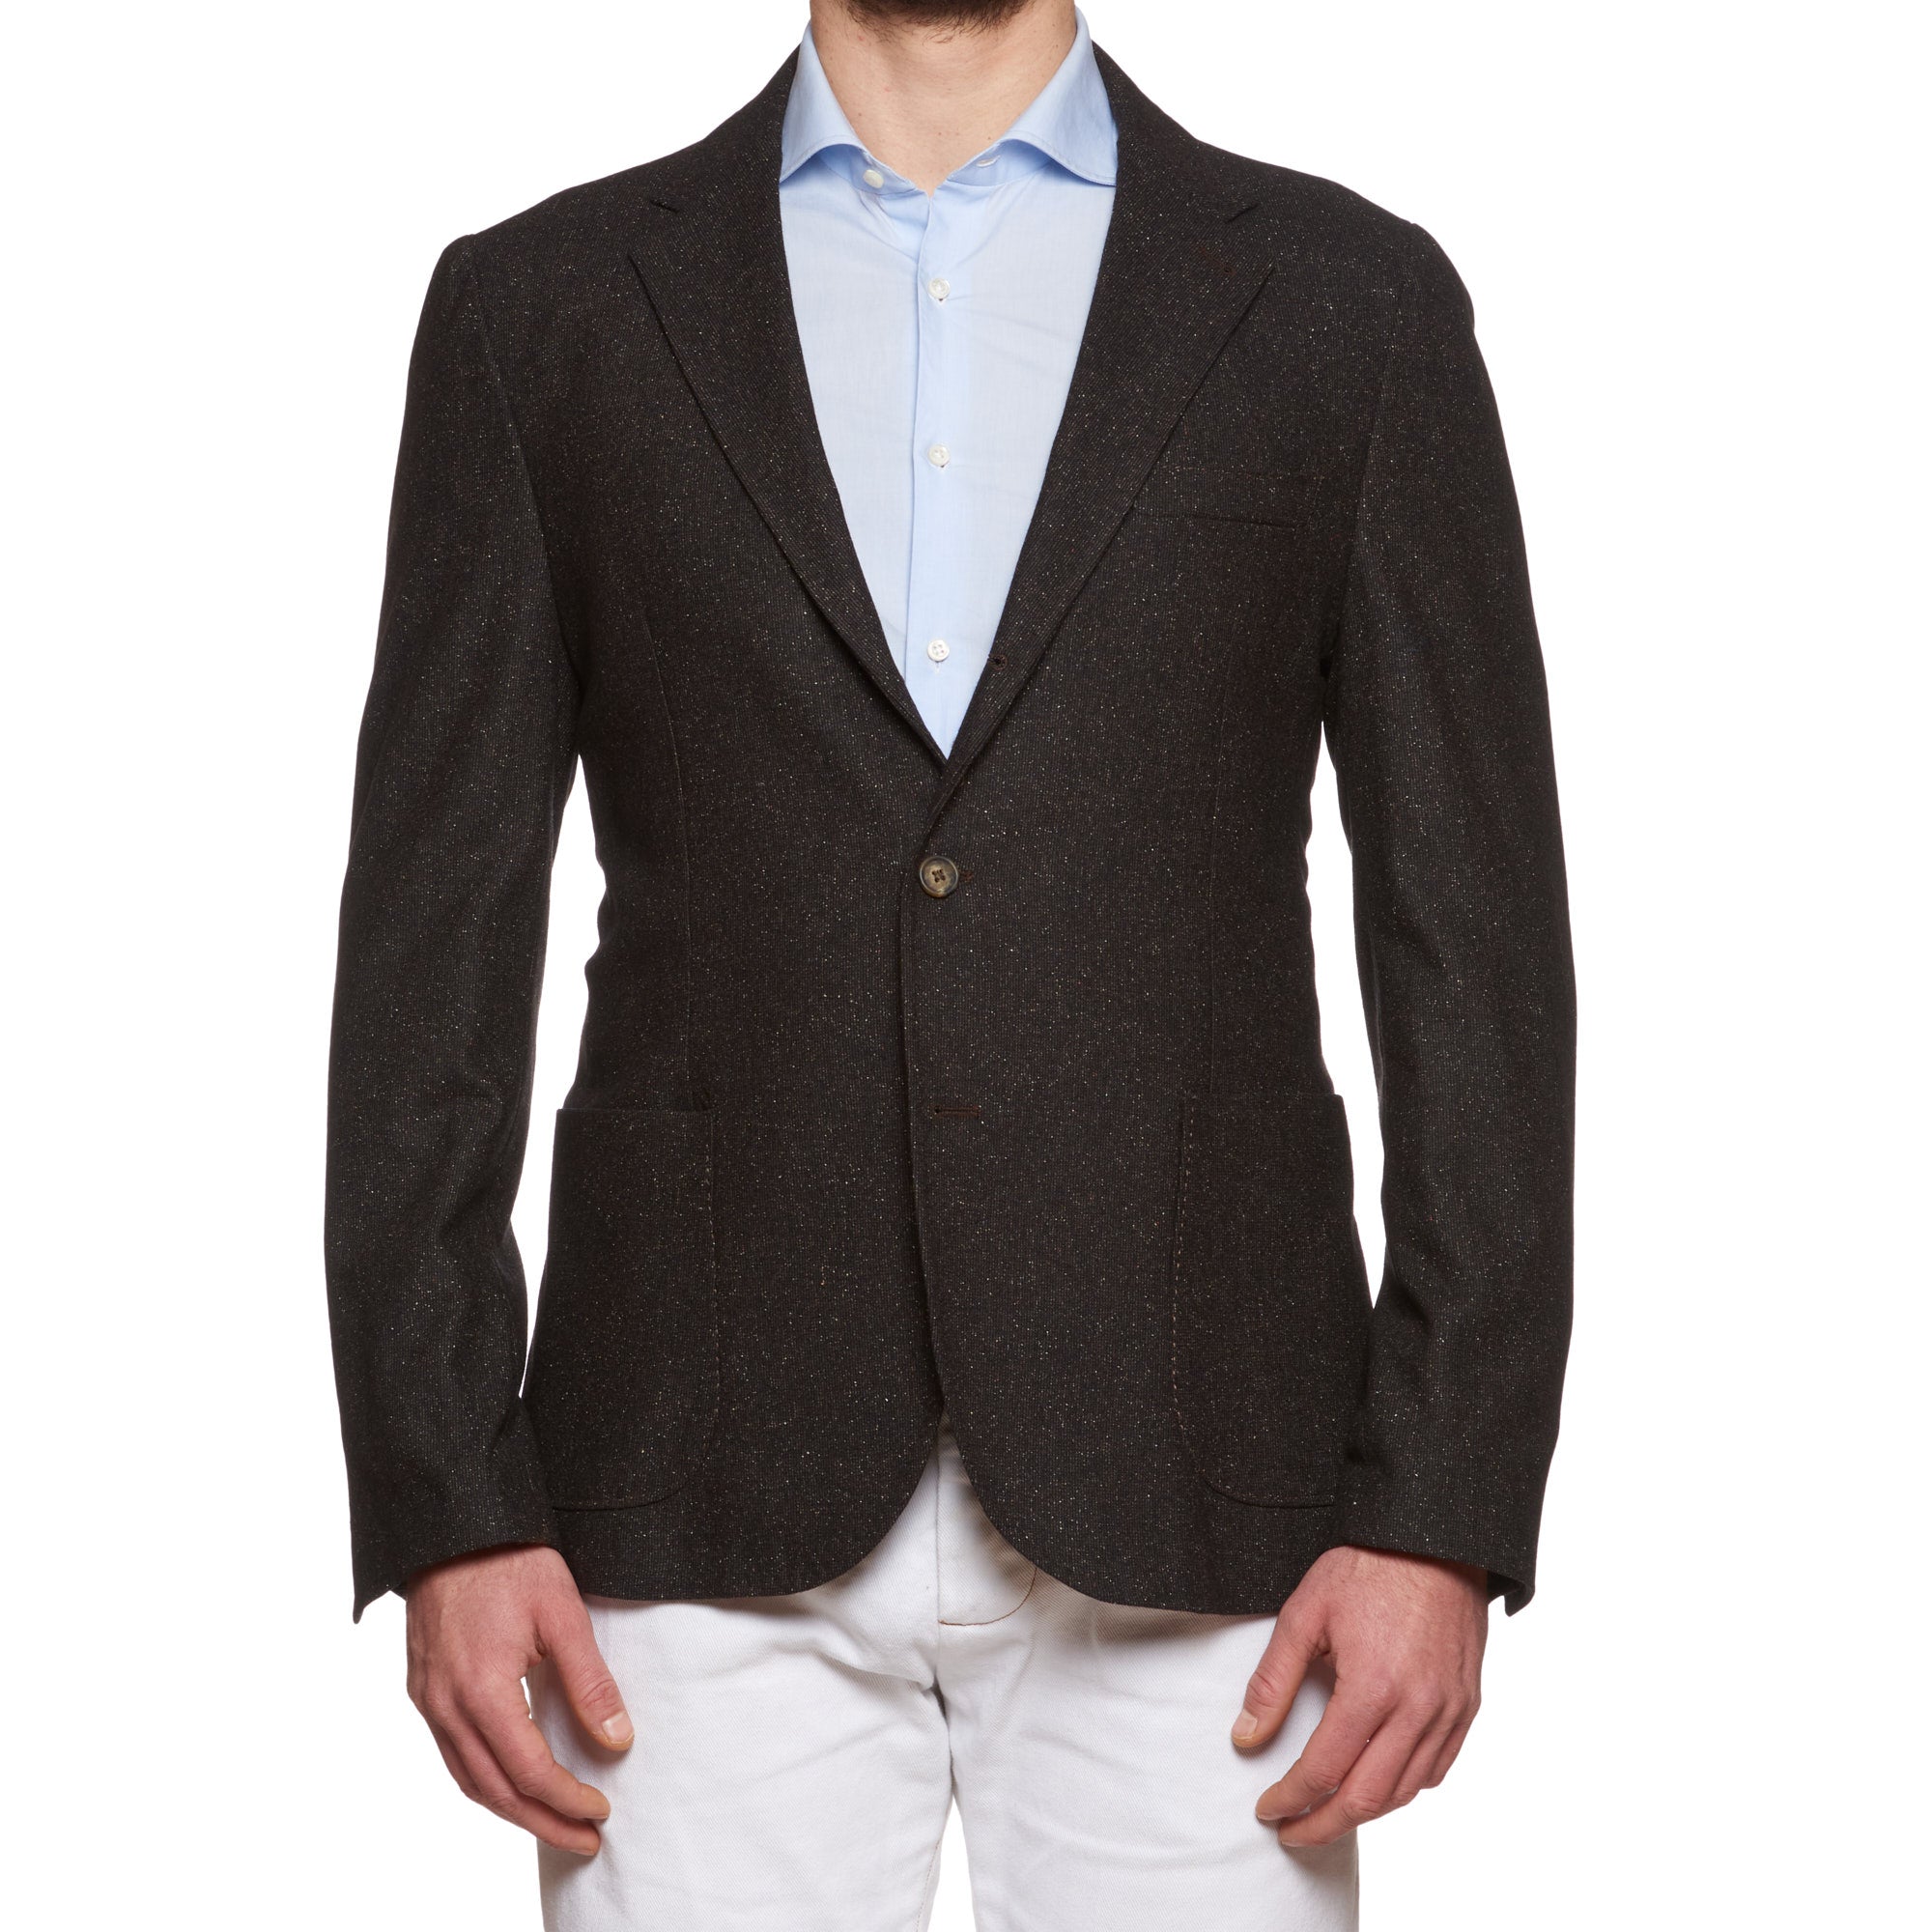 VINCENZO PALUMBO "Alfred" Brown Donegal Wool Jacket EU 56 NEW US 46 Slim Fit VINCENZO PALUMBO